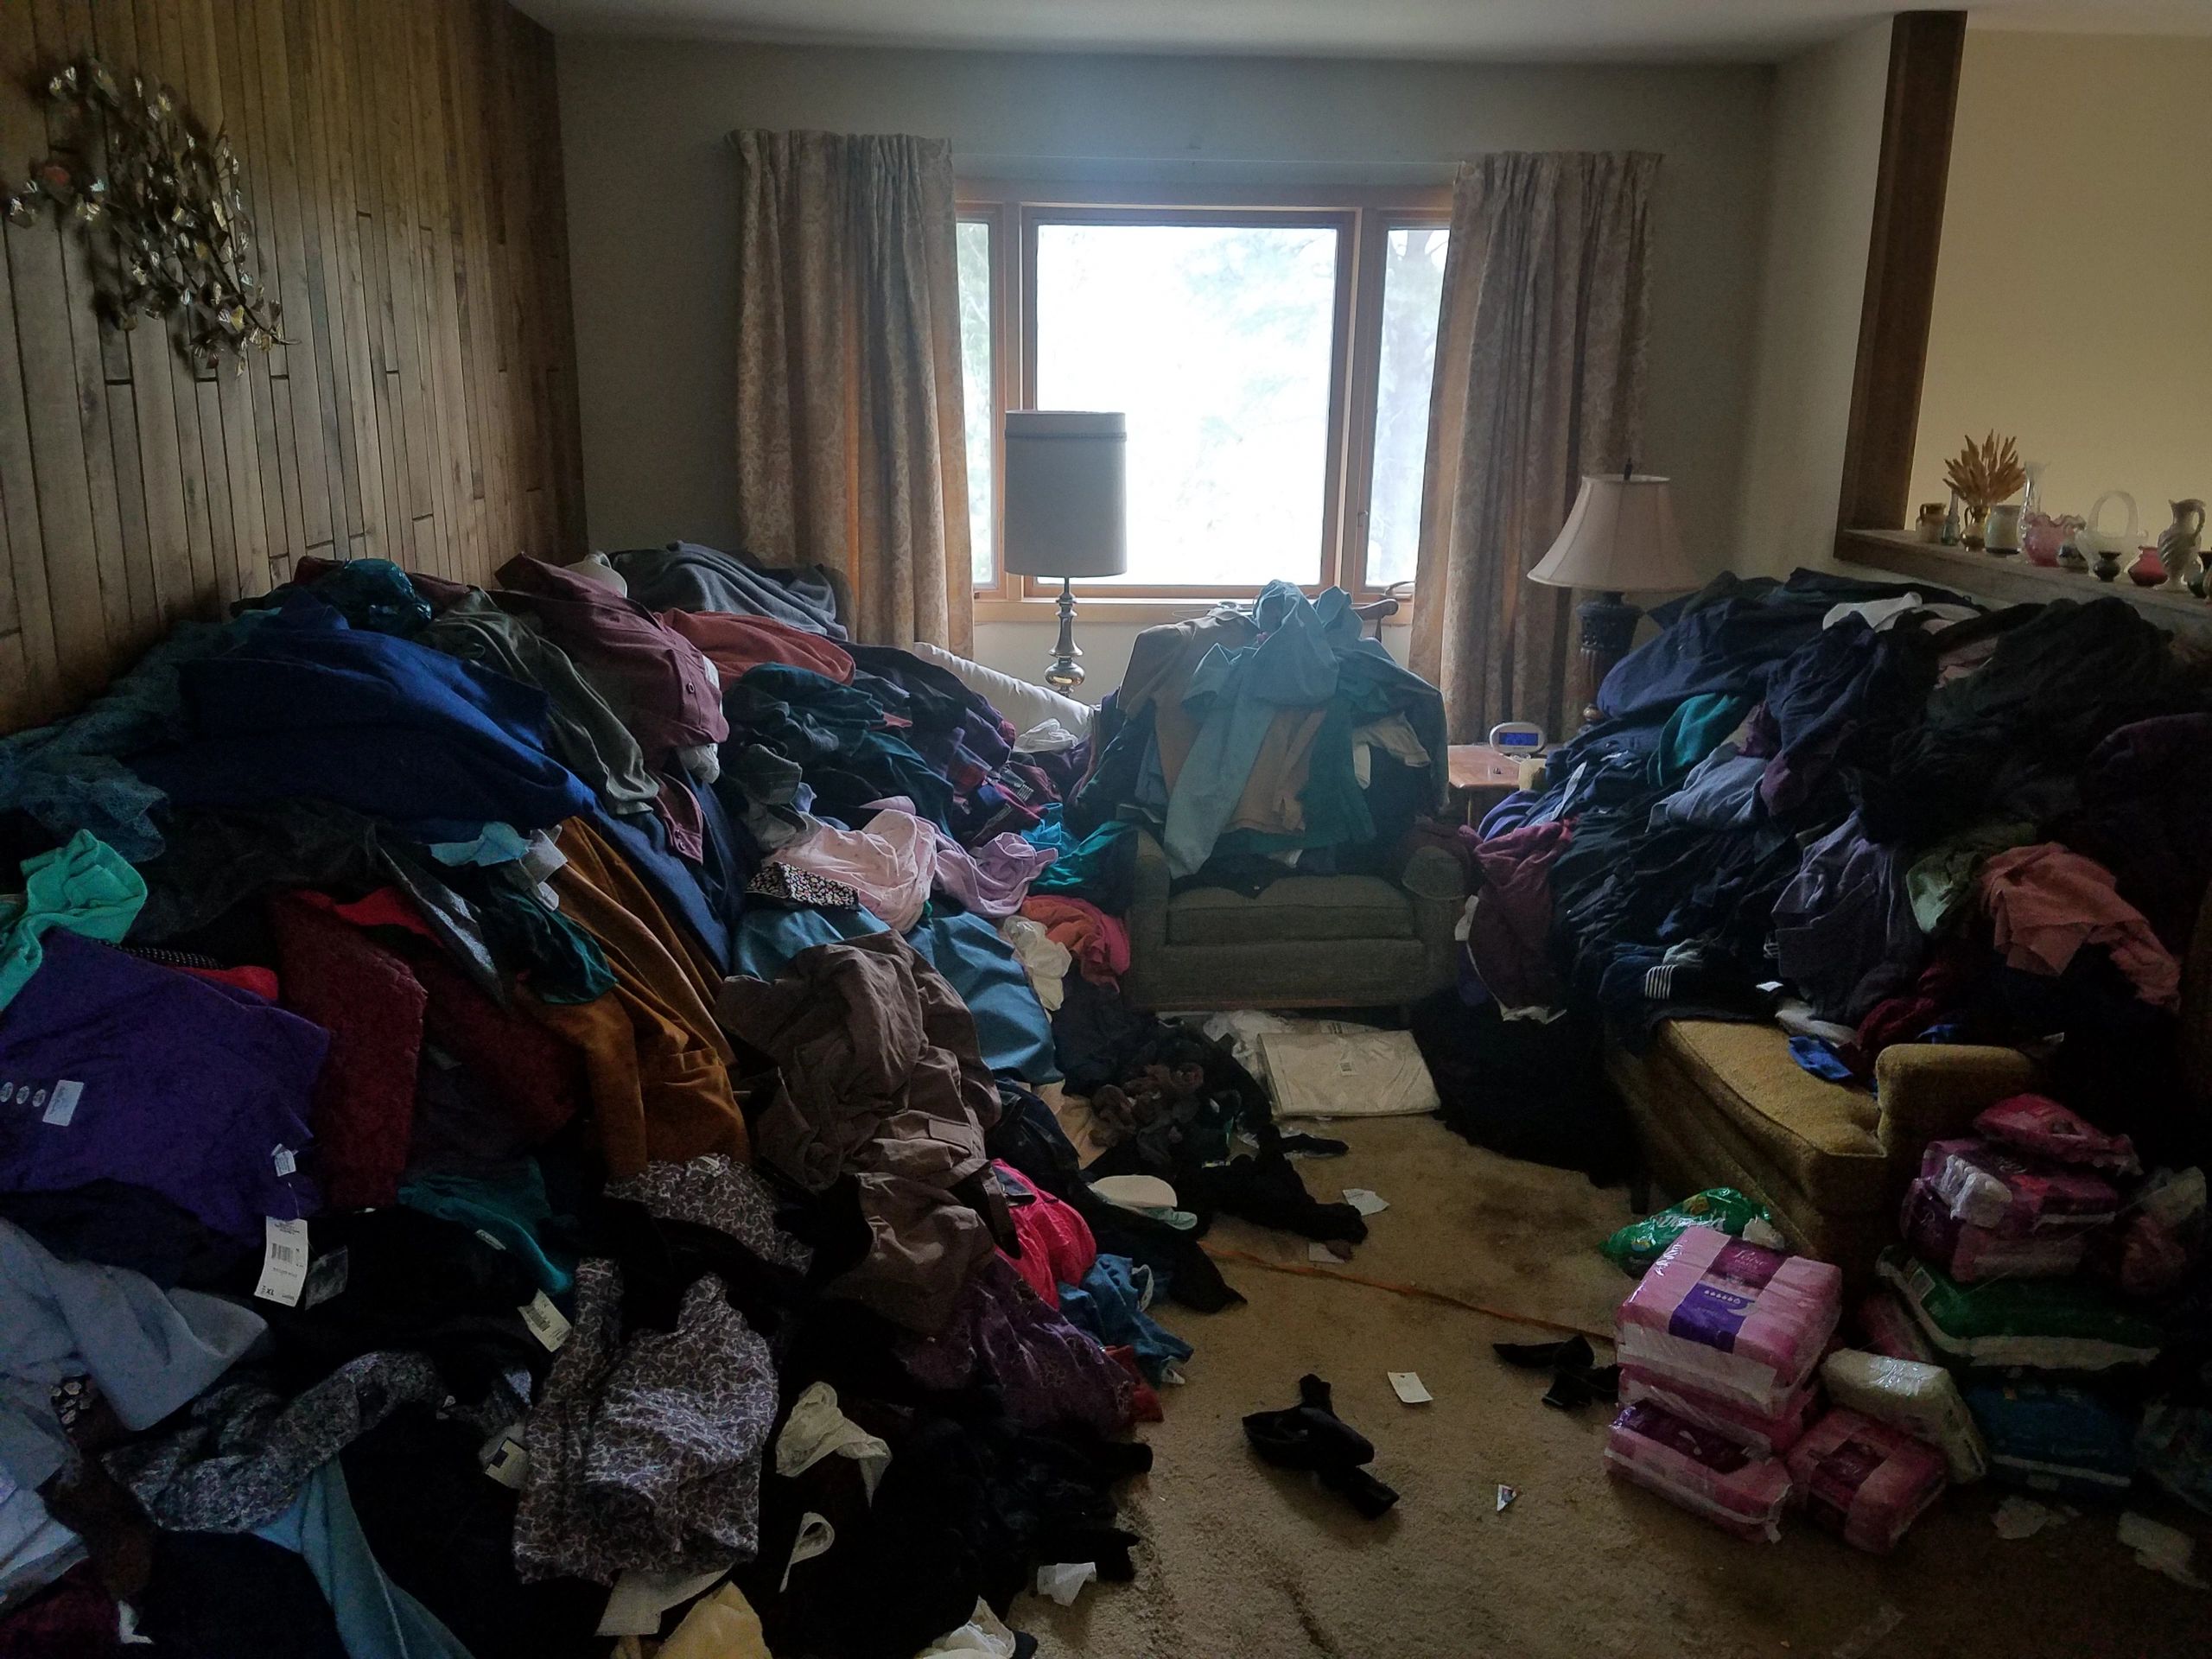 Clean up kid clutter – The Denver Post